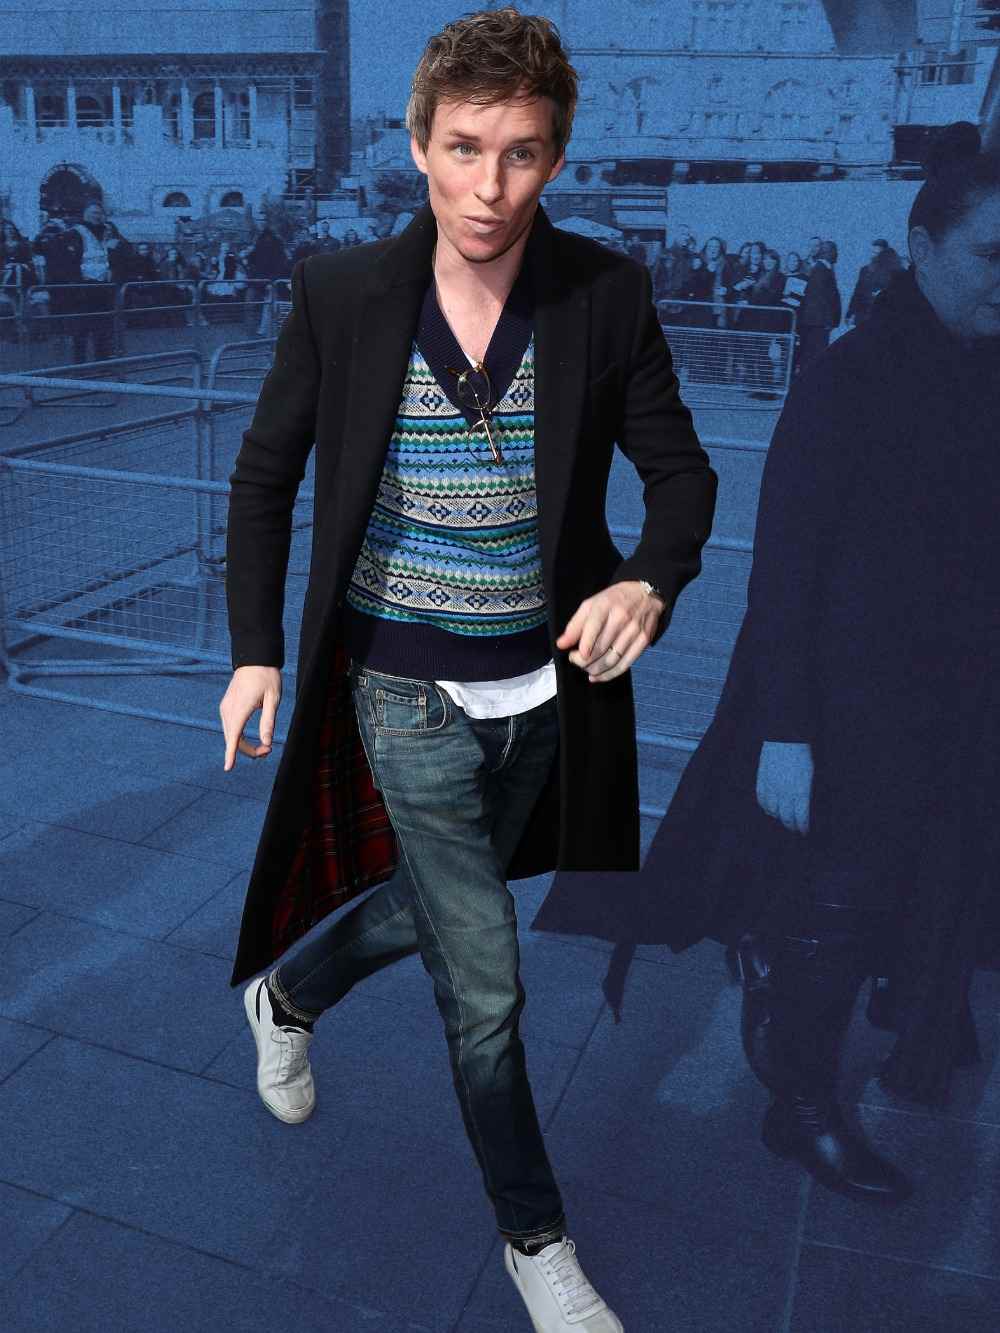 fashion icon eddie redmayne with winter jacket and v-cut pulli 80s fashion men style